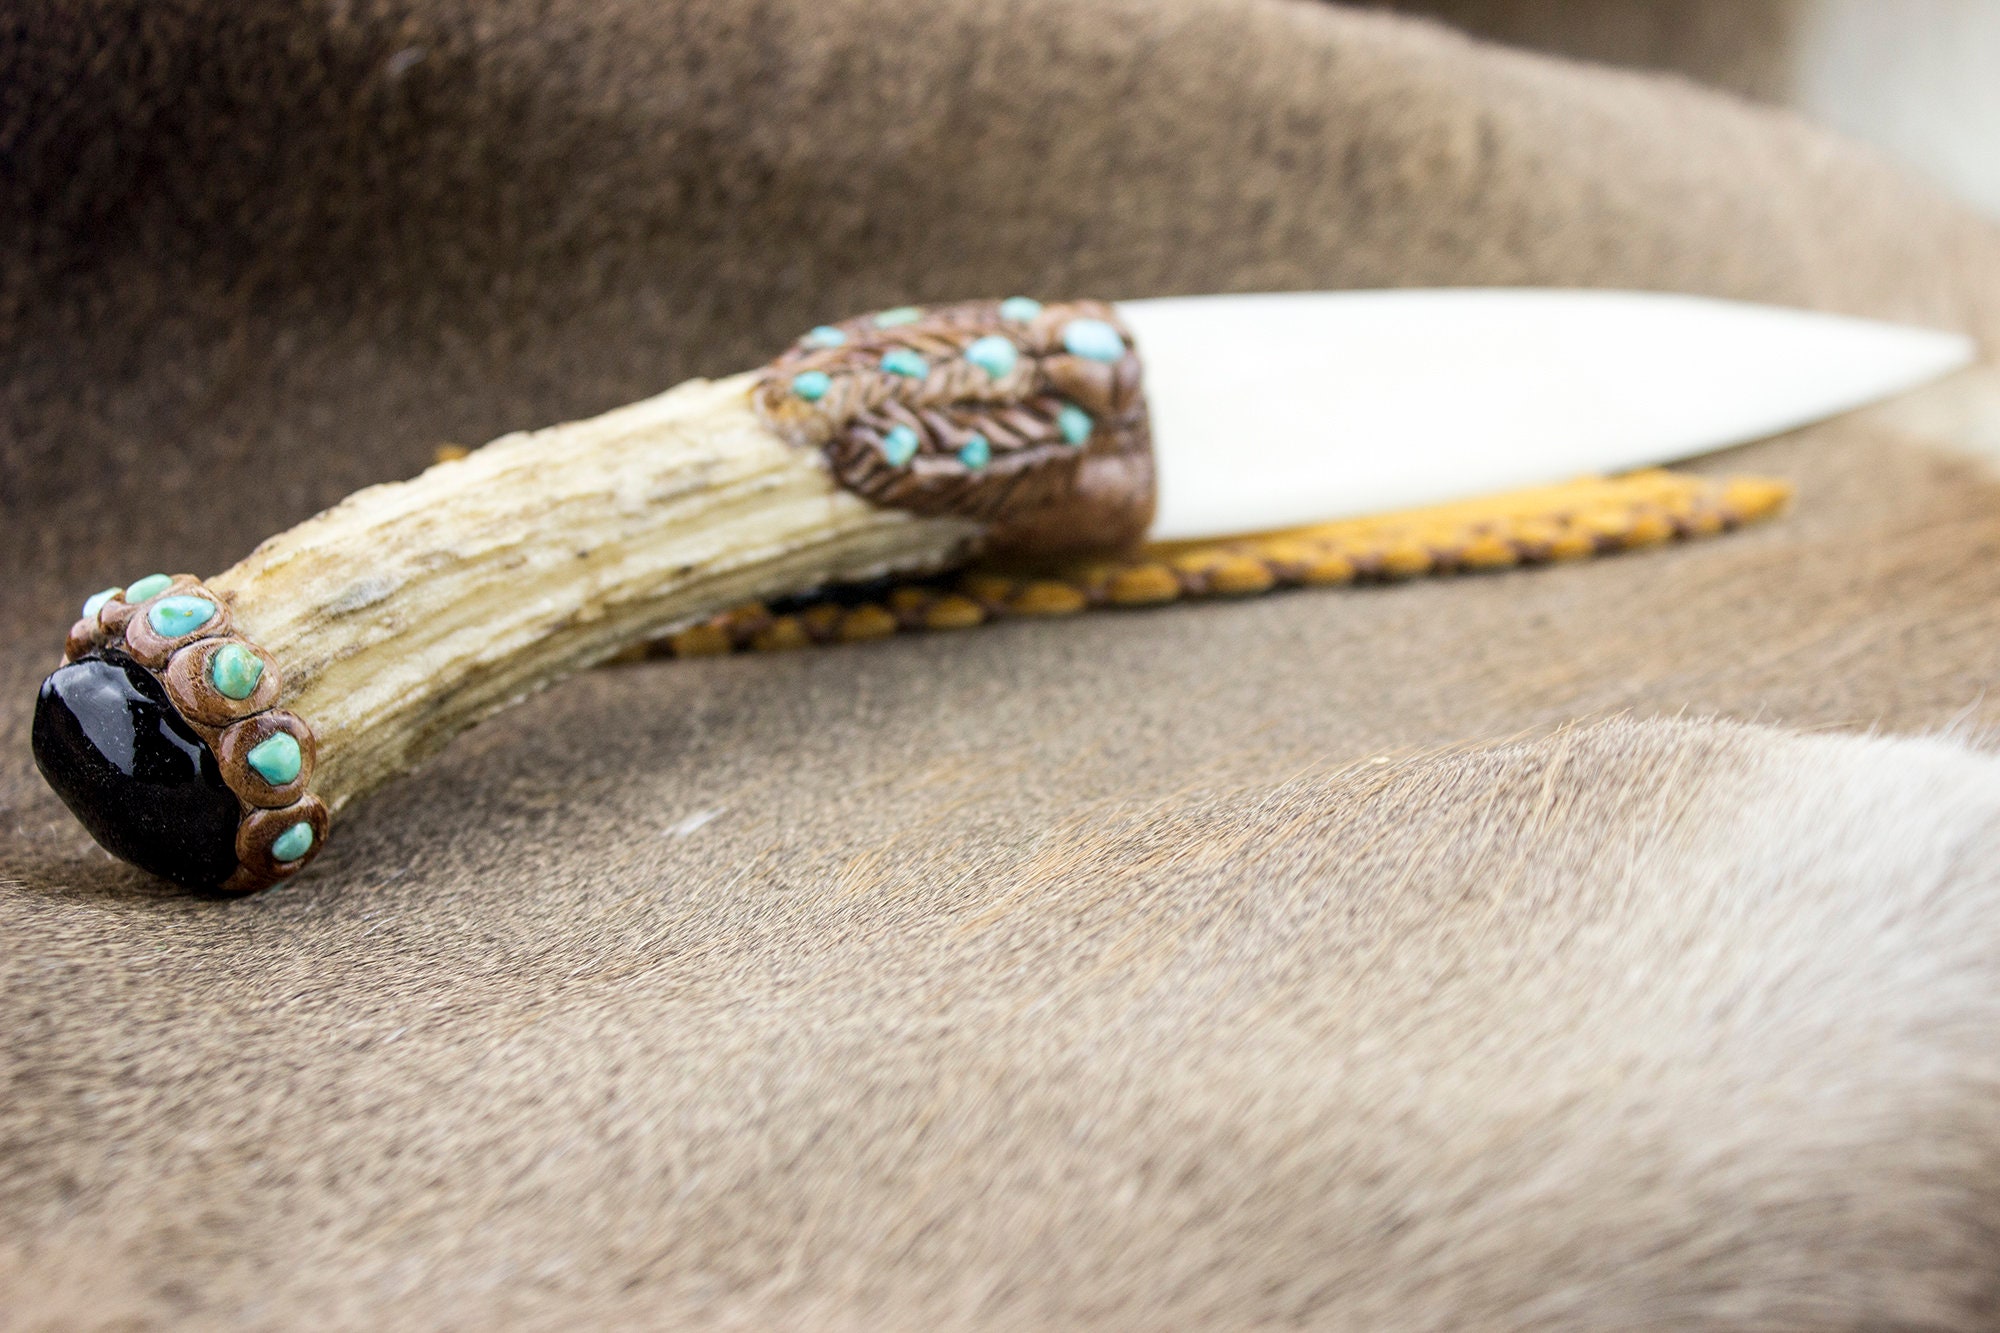 Bone Knife - Handmade Native American Deer Antler Bone Knife With